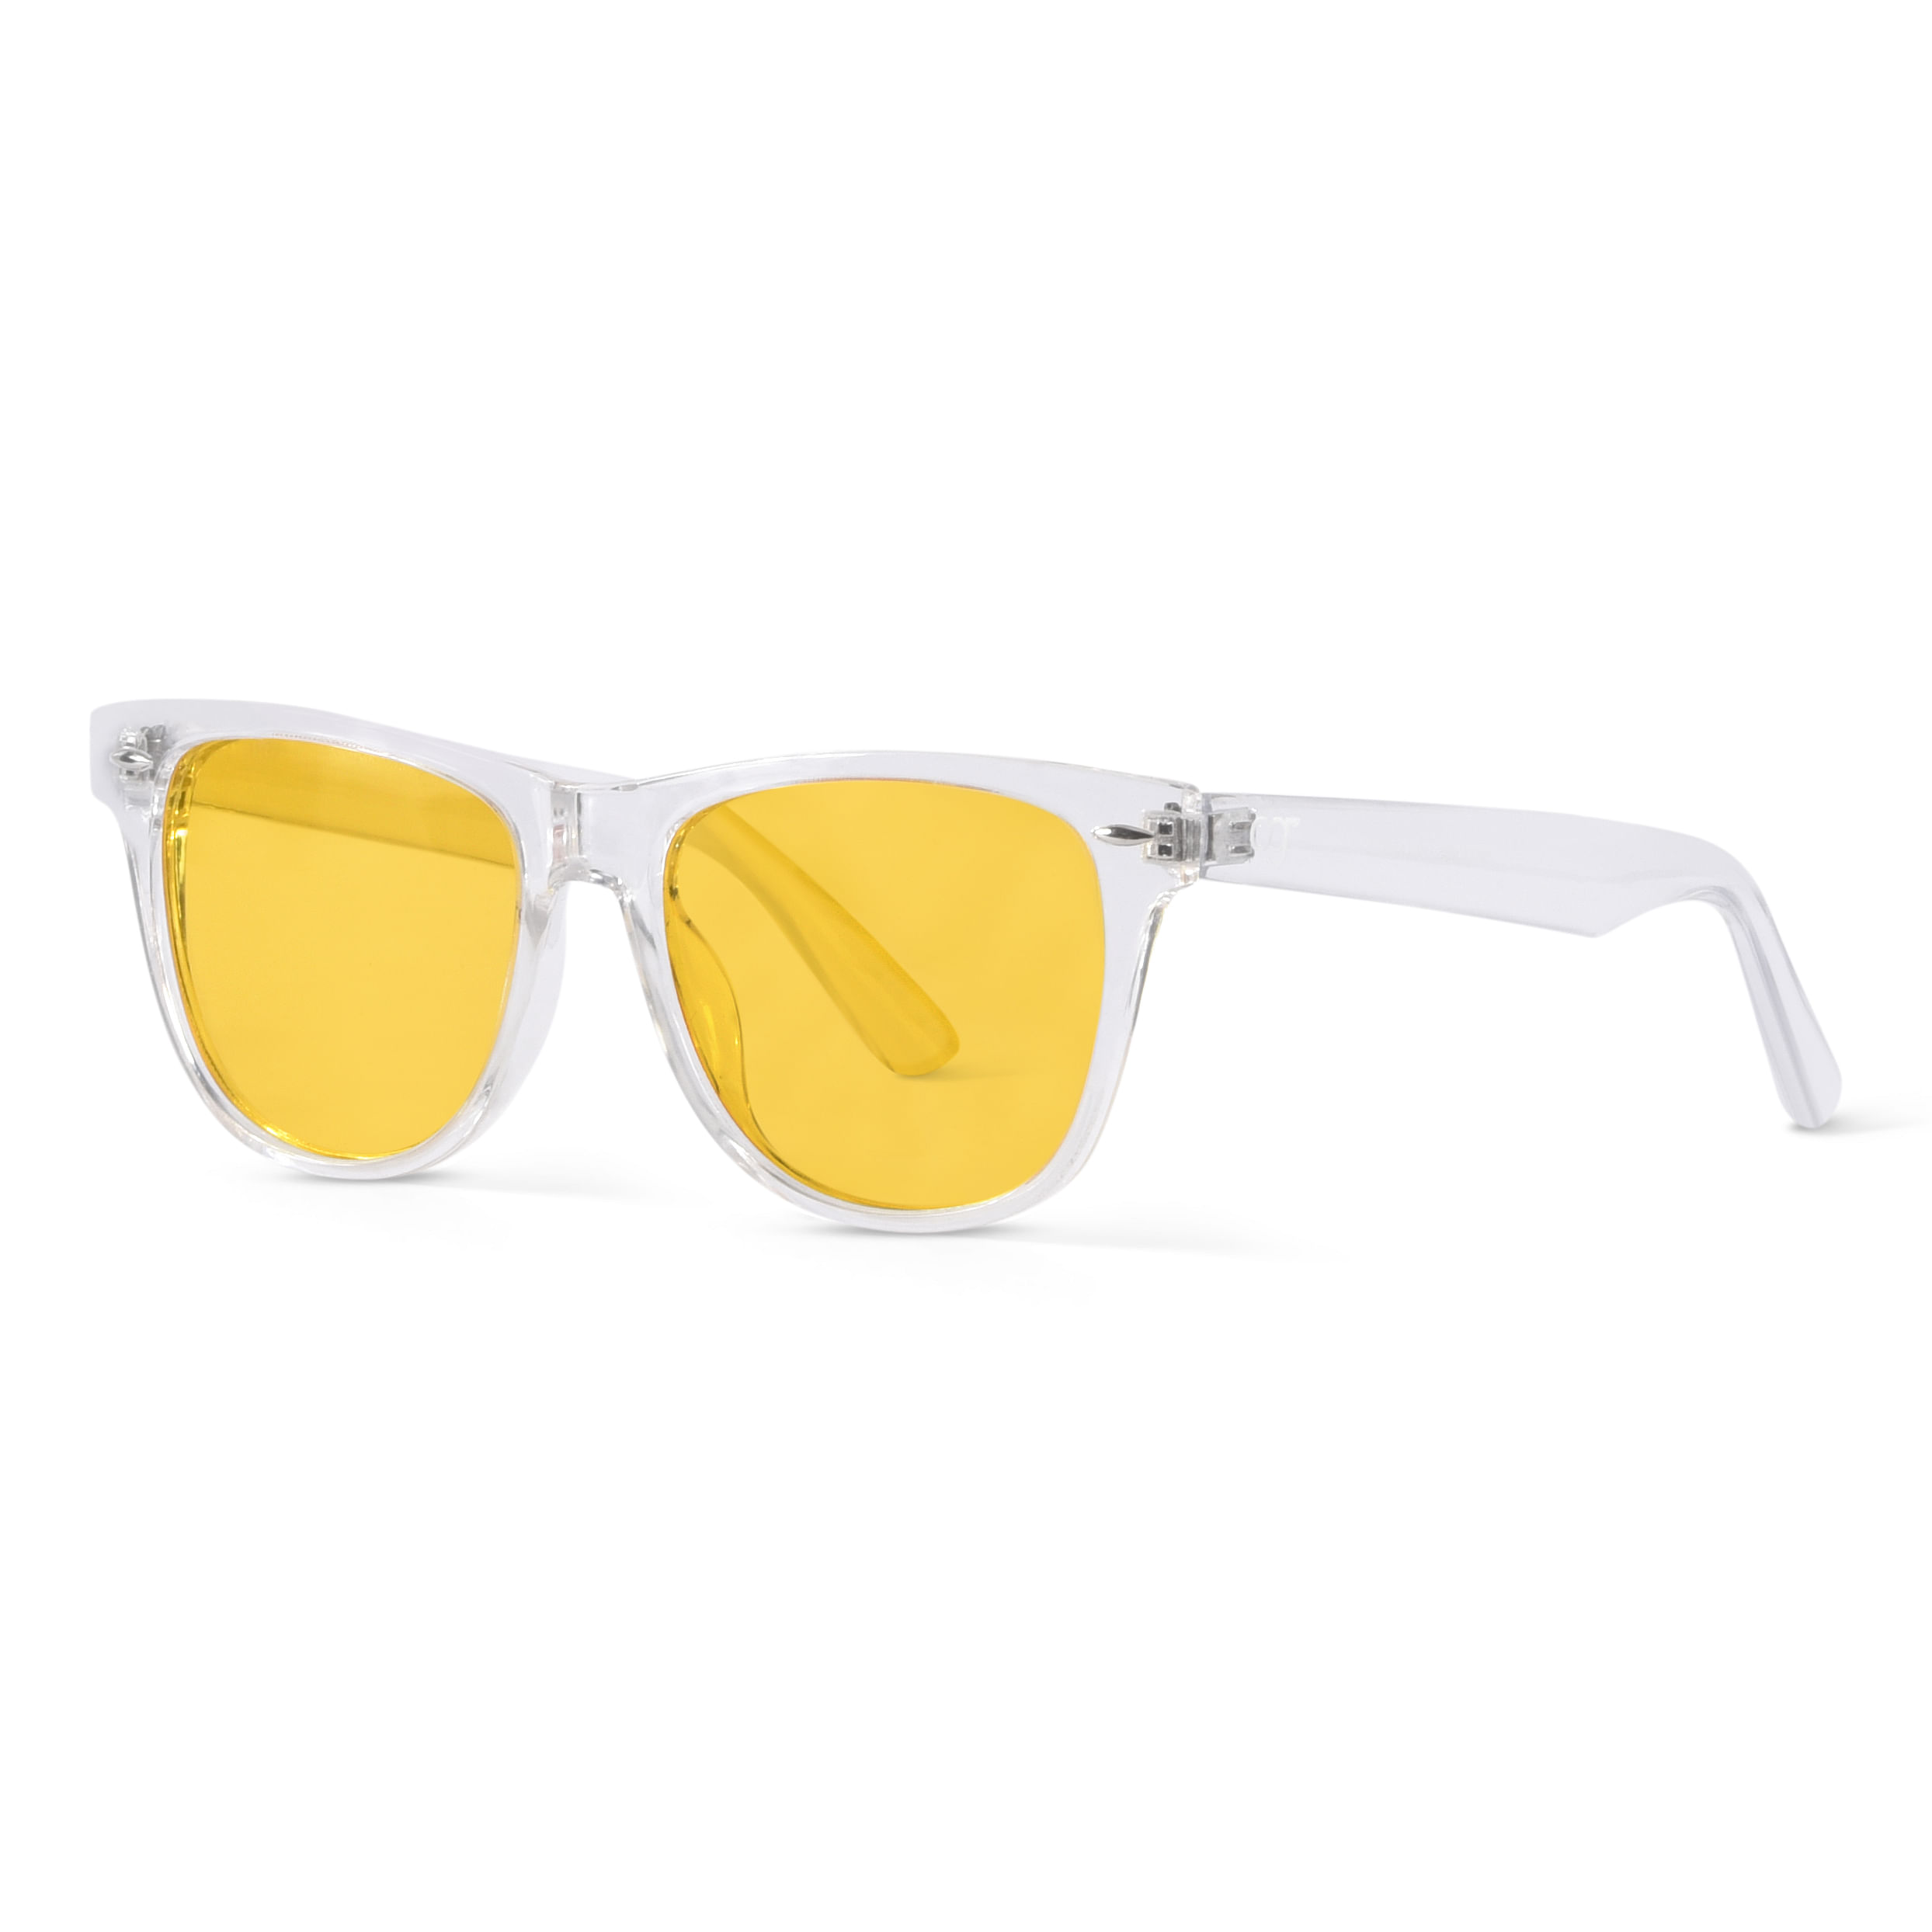 GetUSCart- Pro Acme Retro Small Round Polarized Sunglasses for Men Women  John Lennon Style (Gold Frame/Transparent Pink Lens)